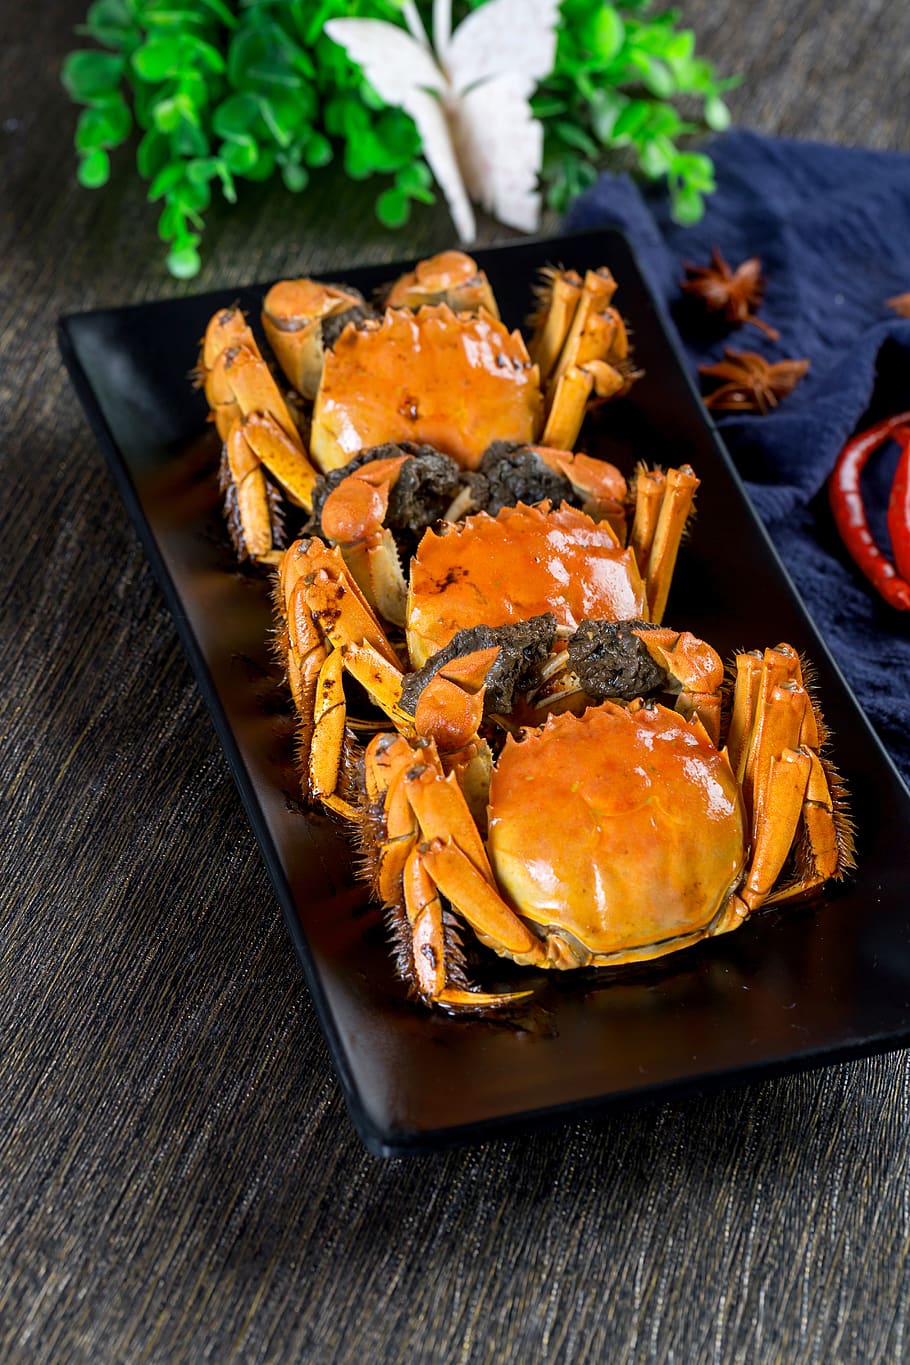 crabs, shrimp inspector gadget, food and drink, freshness, seafood